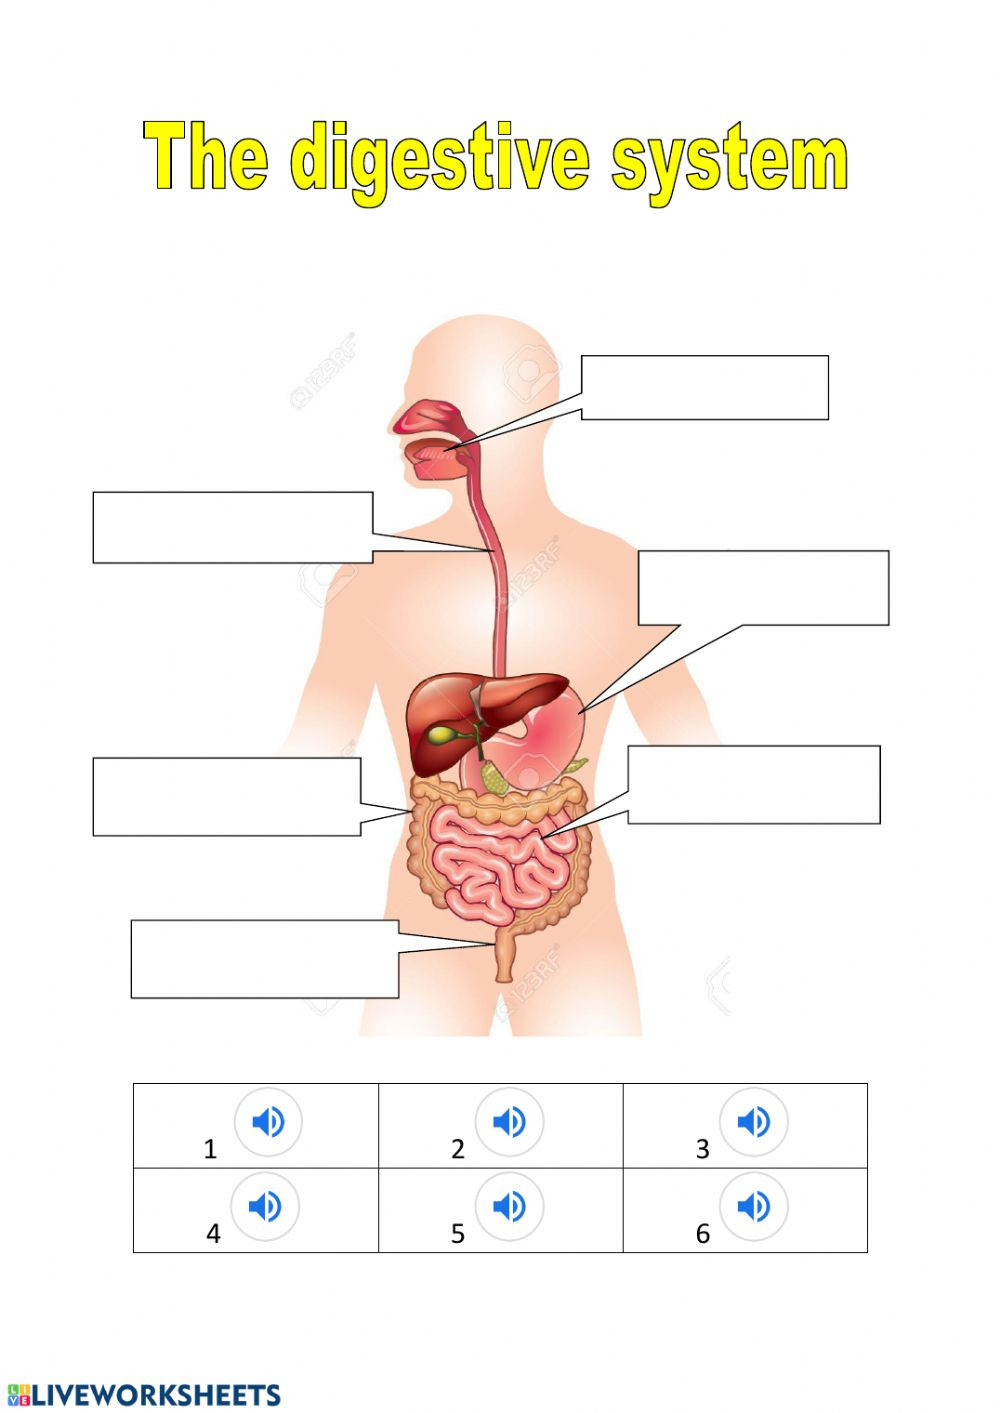 Digestive System Worksheet Answer Key the Digestive System Interactive Worksheet